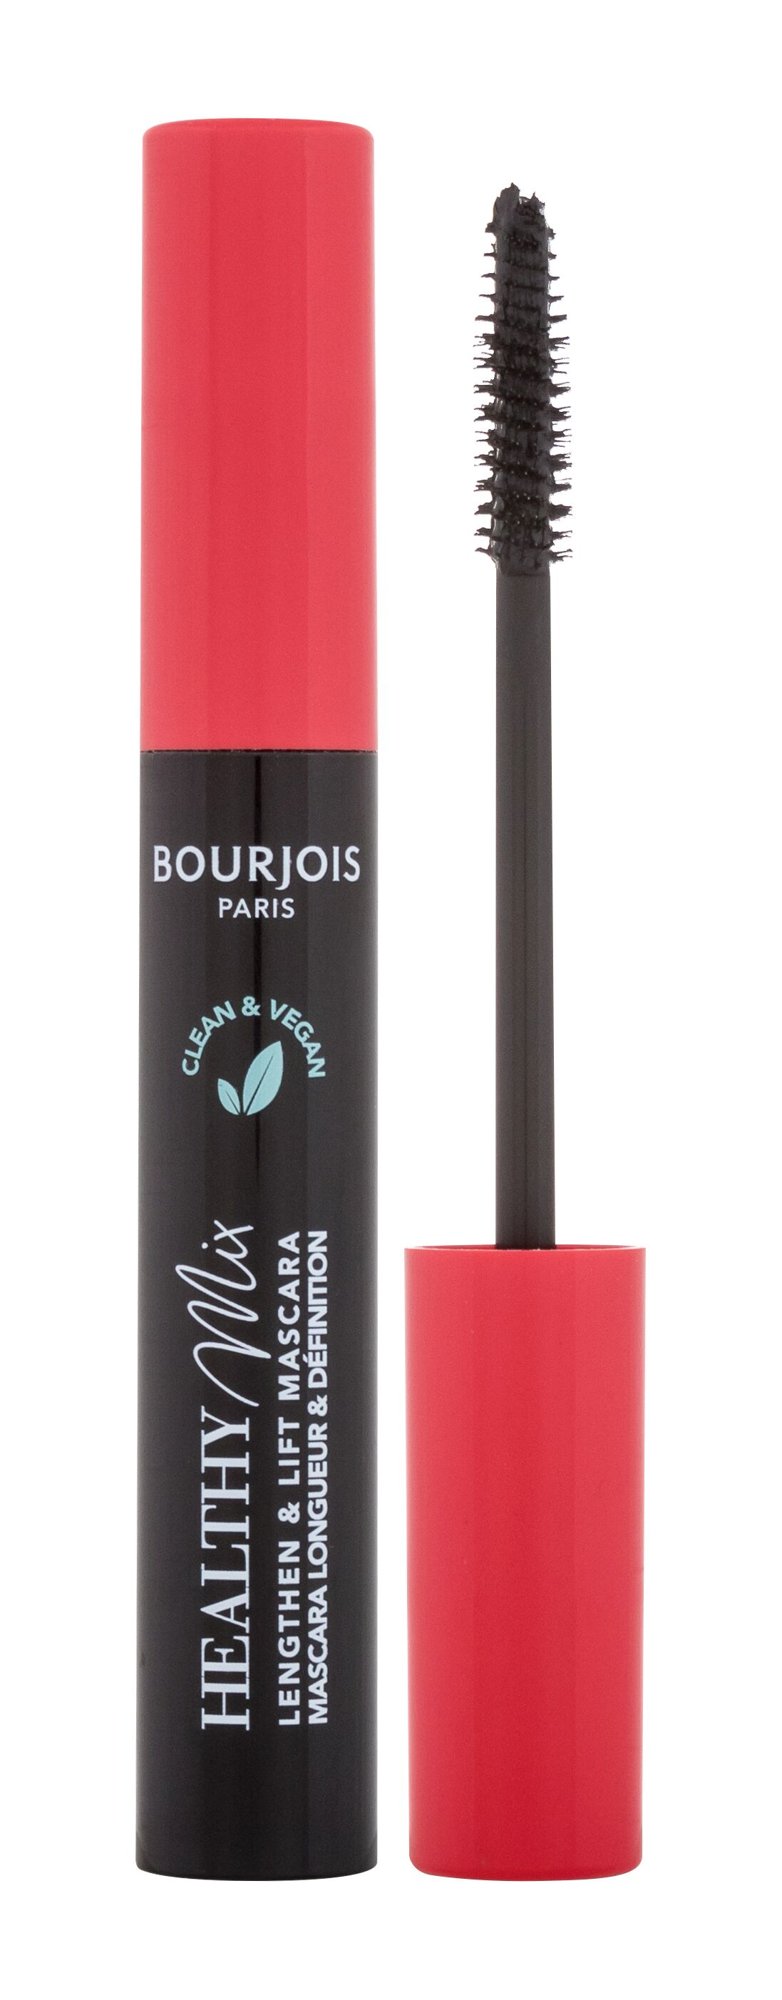 BOURJOIS Paris Healthy Mix Lengthen & Lift Mascara 7ml blakstienų tušas